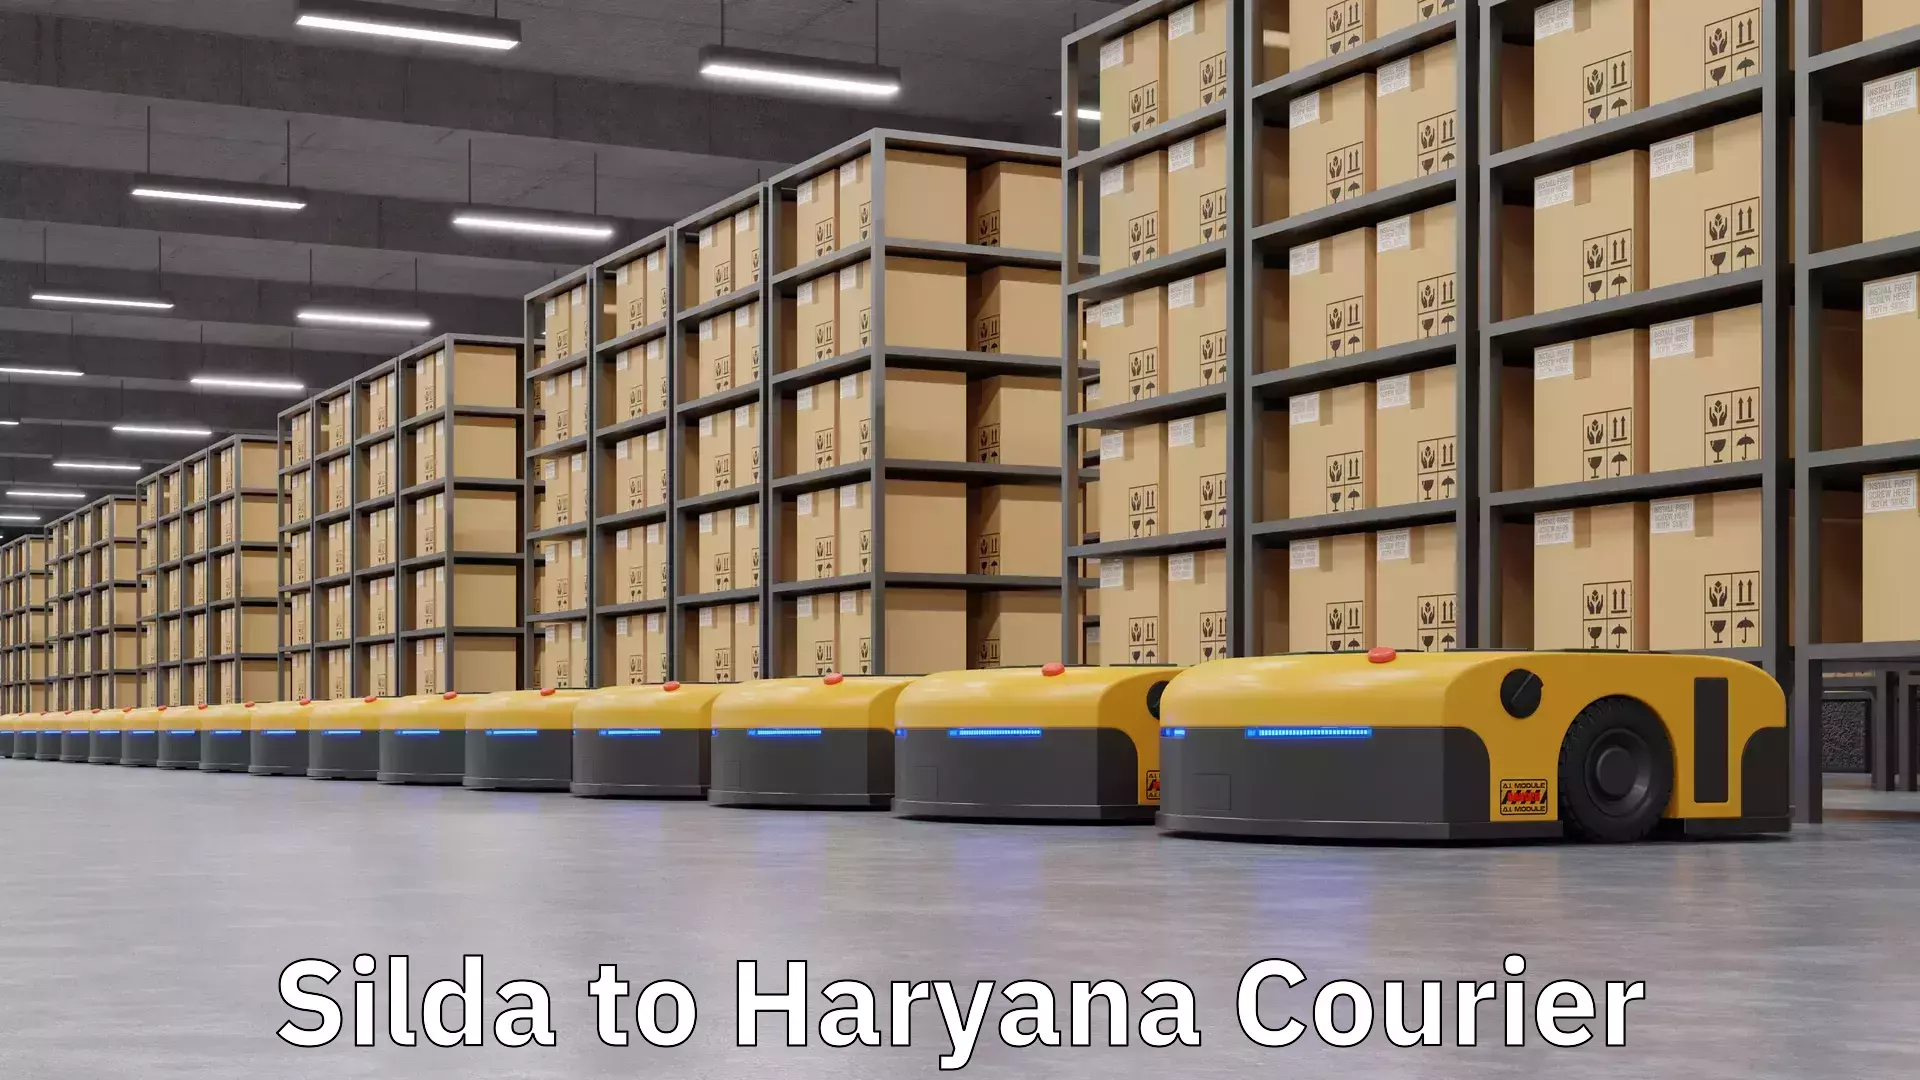 Courier service comparison Silda to Haryana